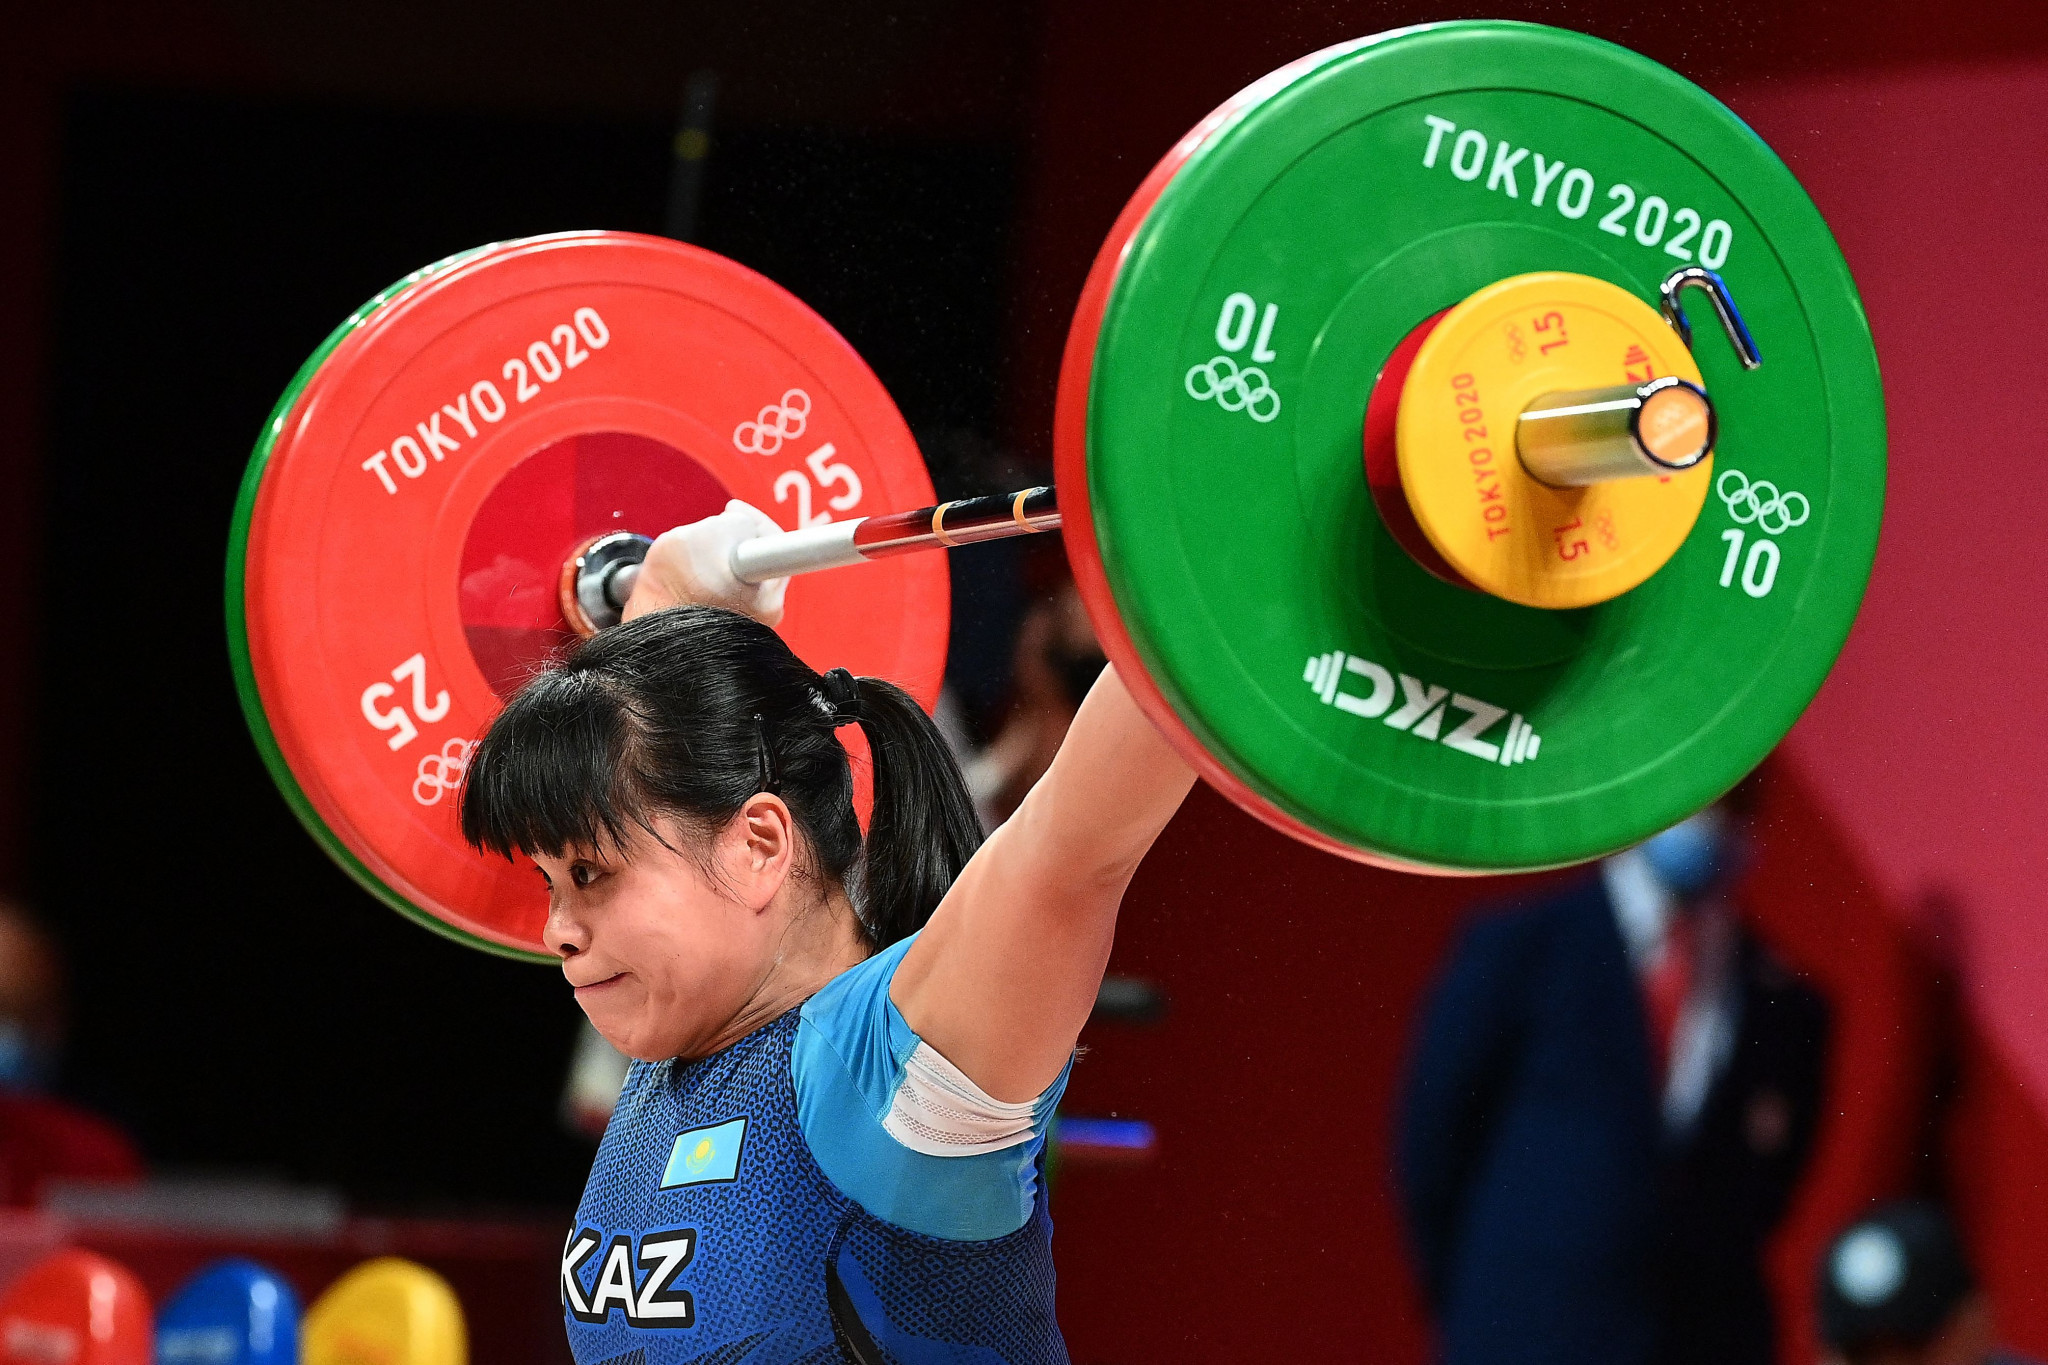 Zulfiya Chinshanlo was a bronze medallist at the Tokyo 2020 Olympics ©Getty Images